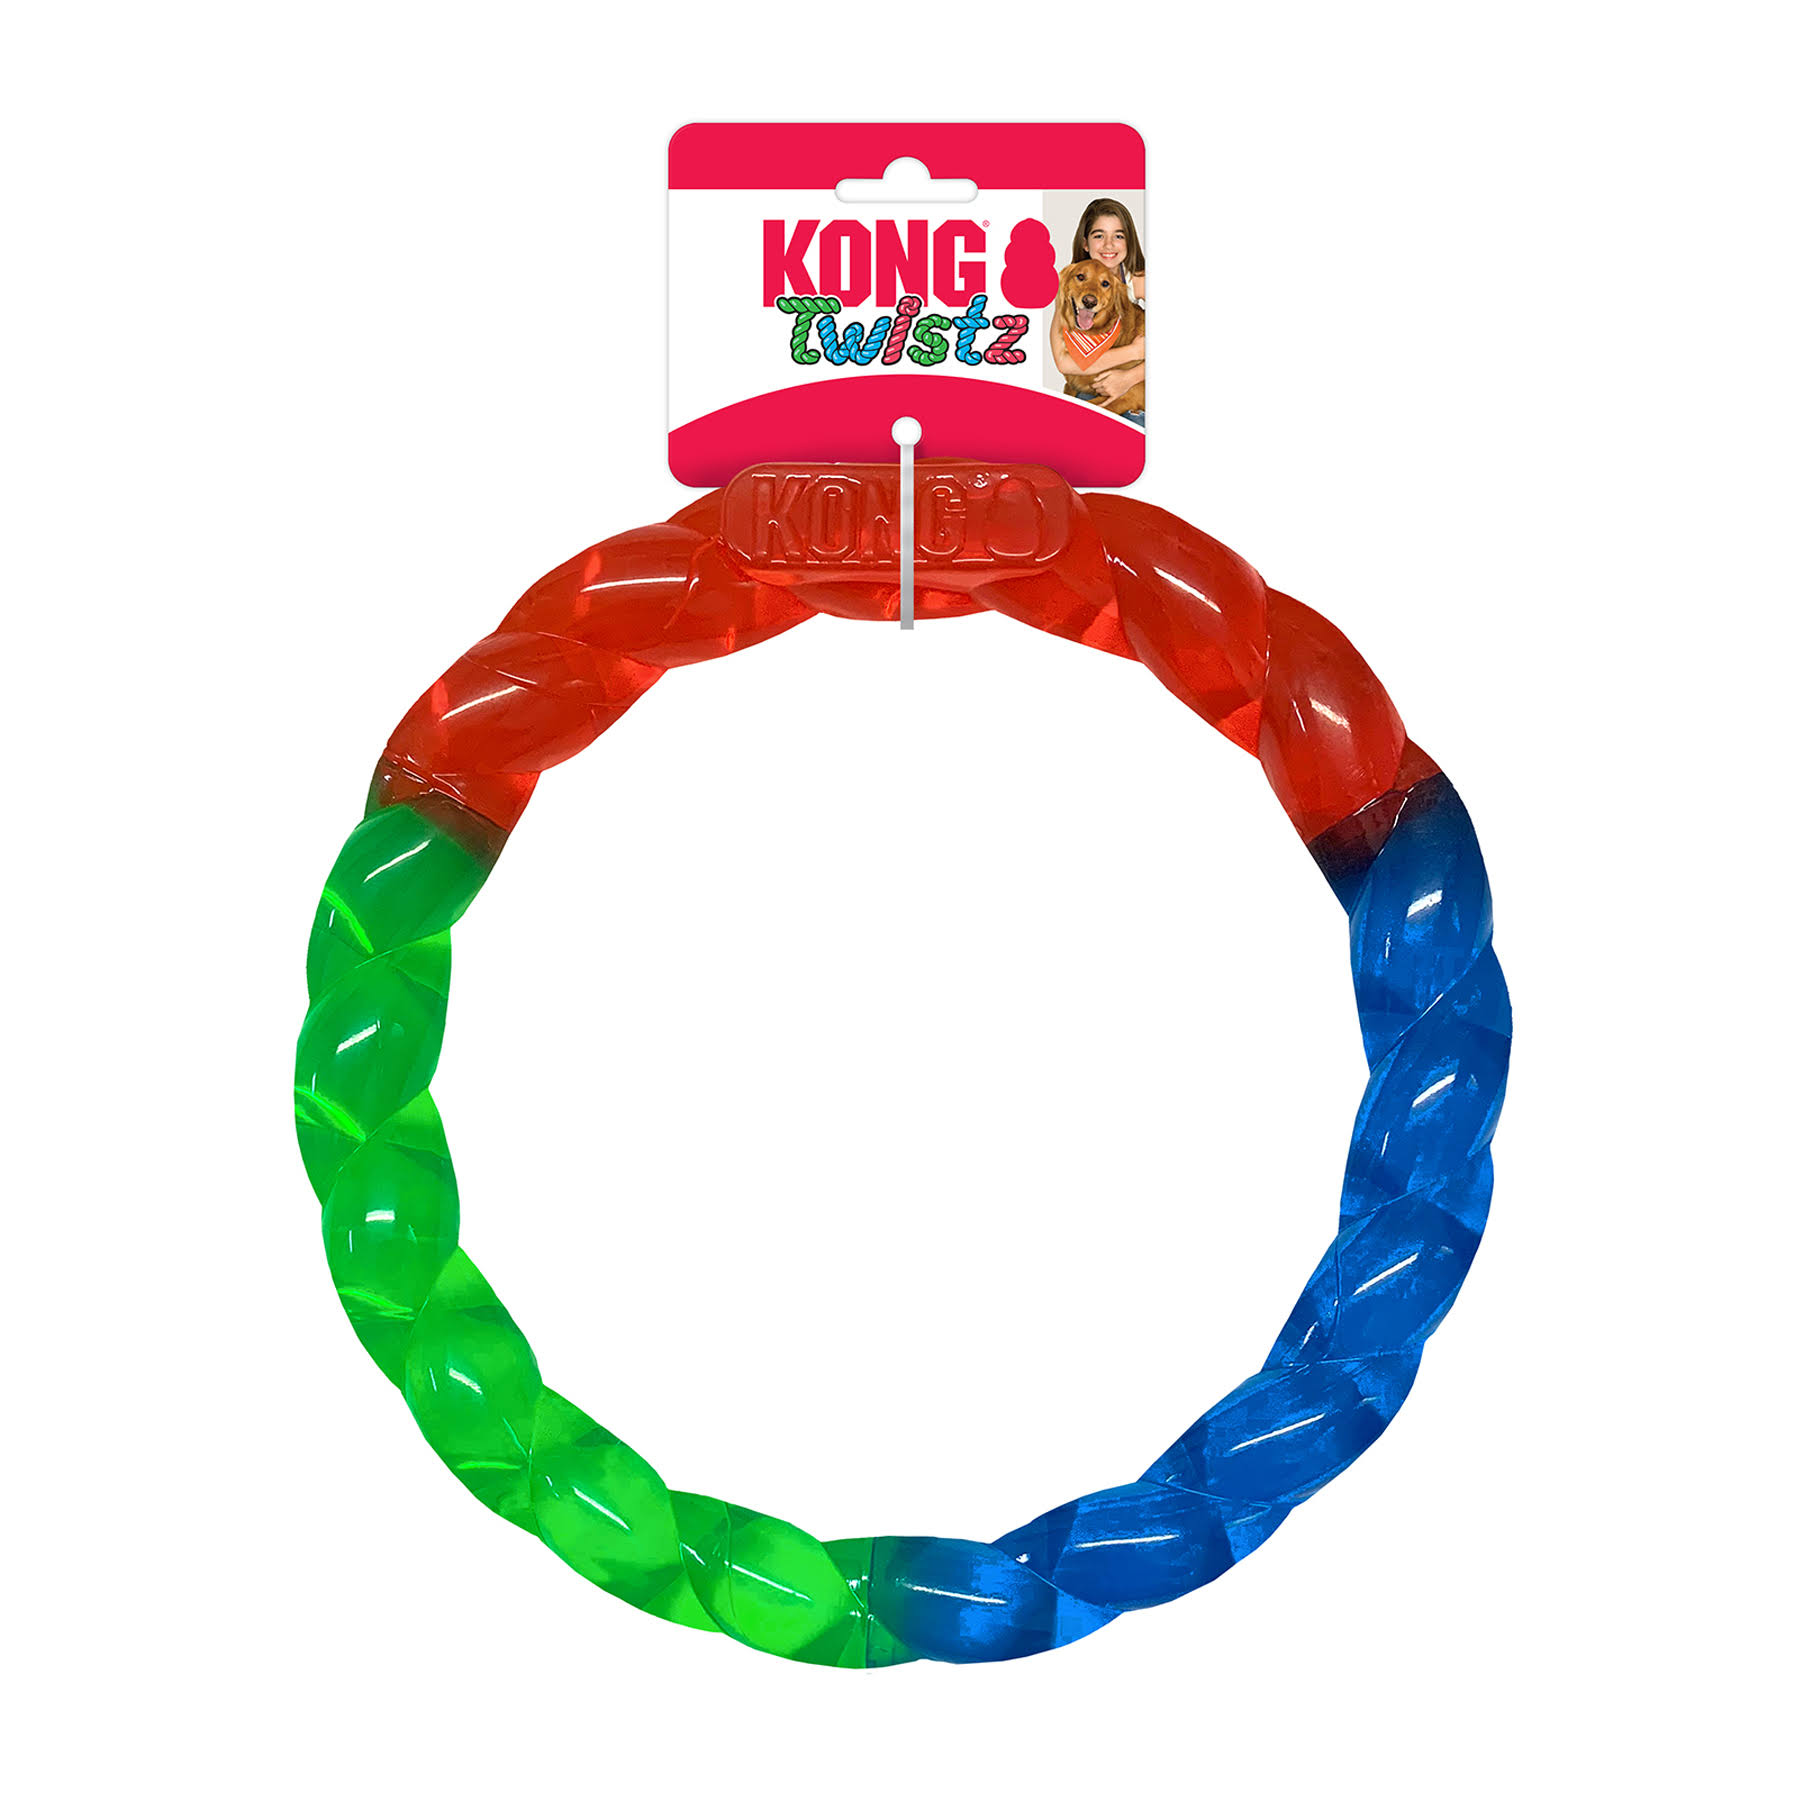 KONG Twistz Ring Dog Toy - Red Green Blue